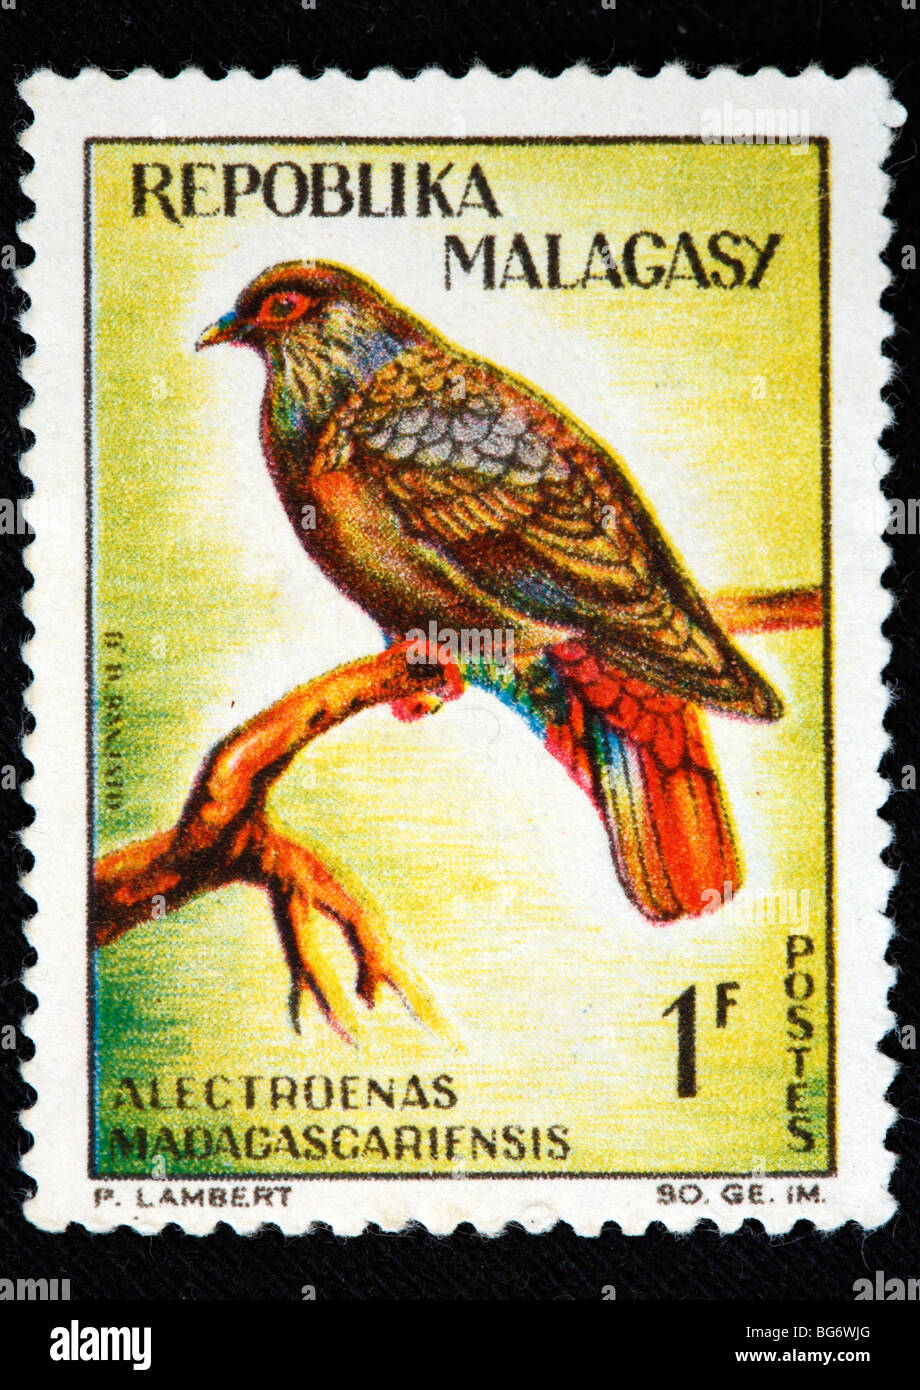 Madagascar-bleu pigeon (Alectroenas madagascariensis), timbre-poste, Madagascar (Madagascar) Banque D'Images